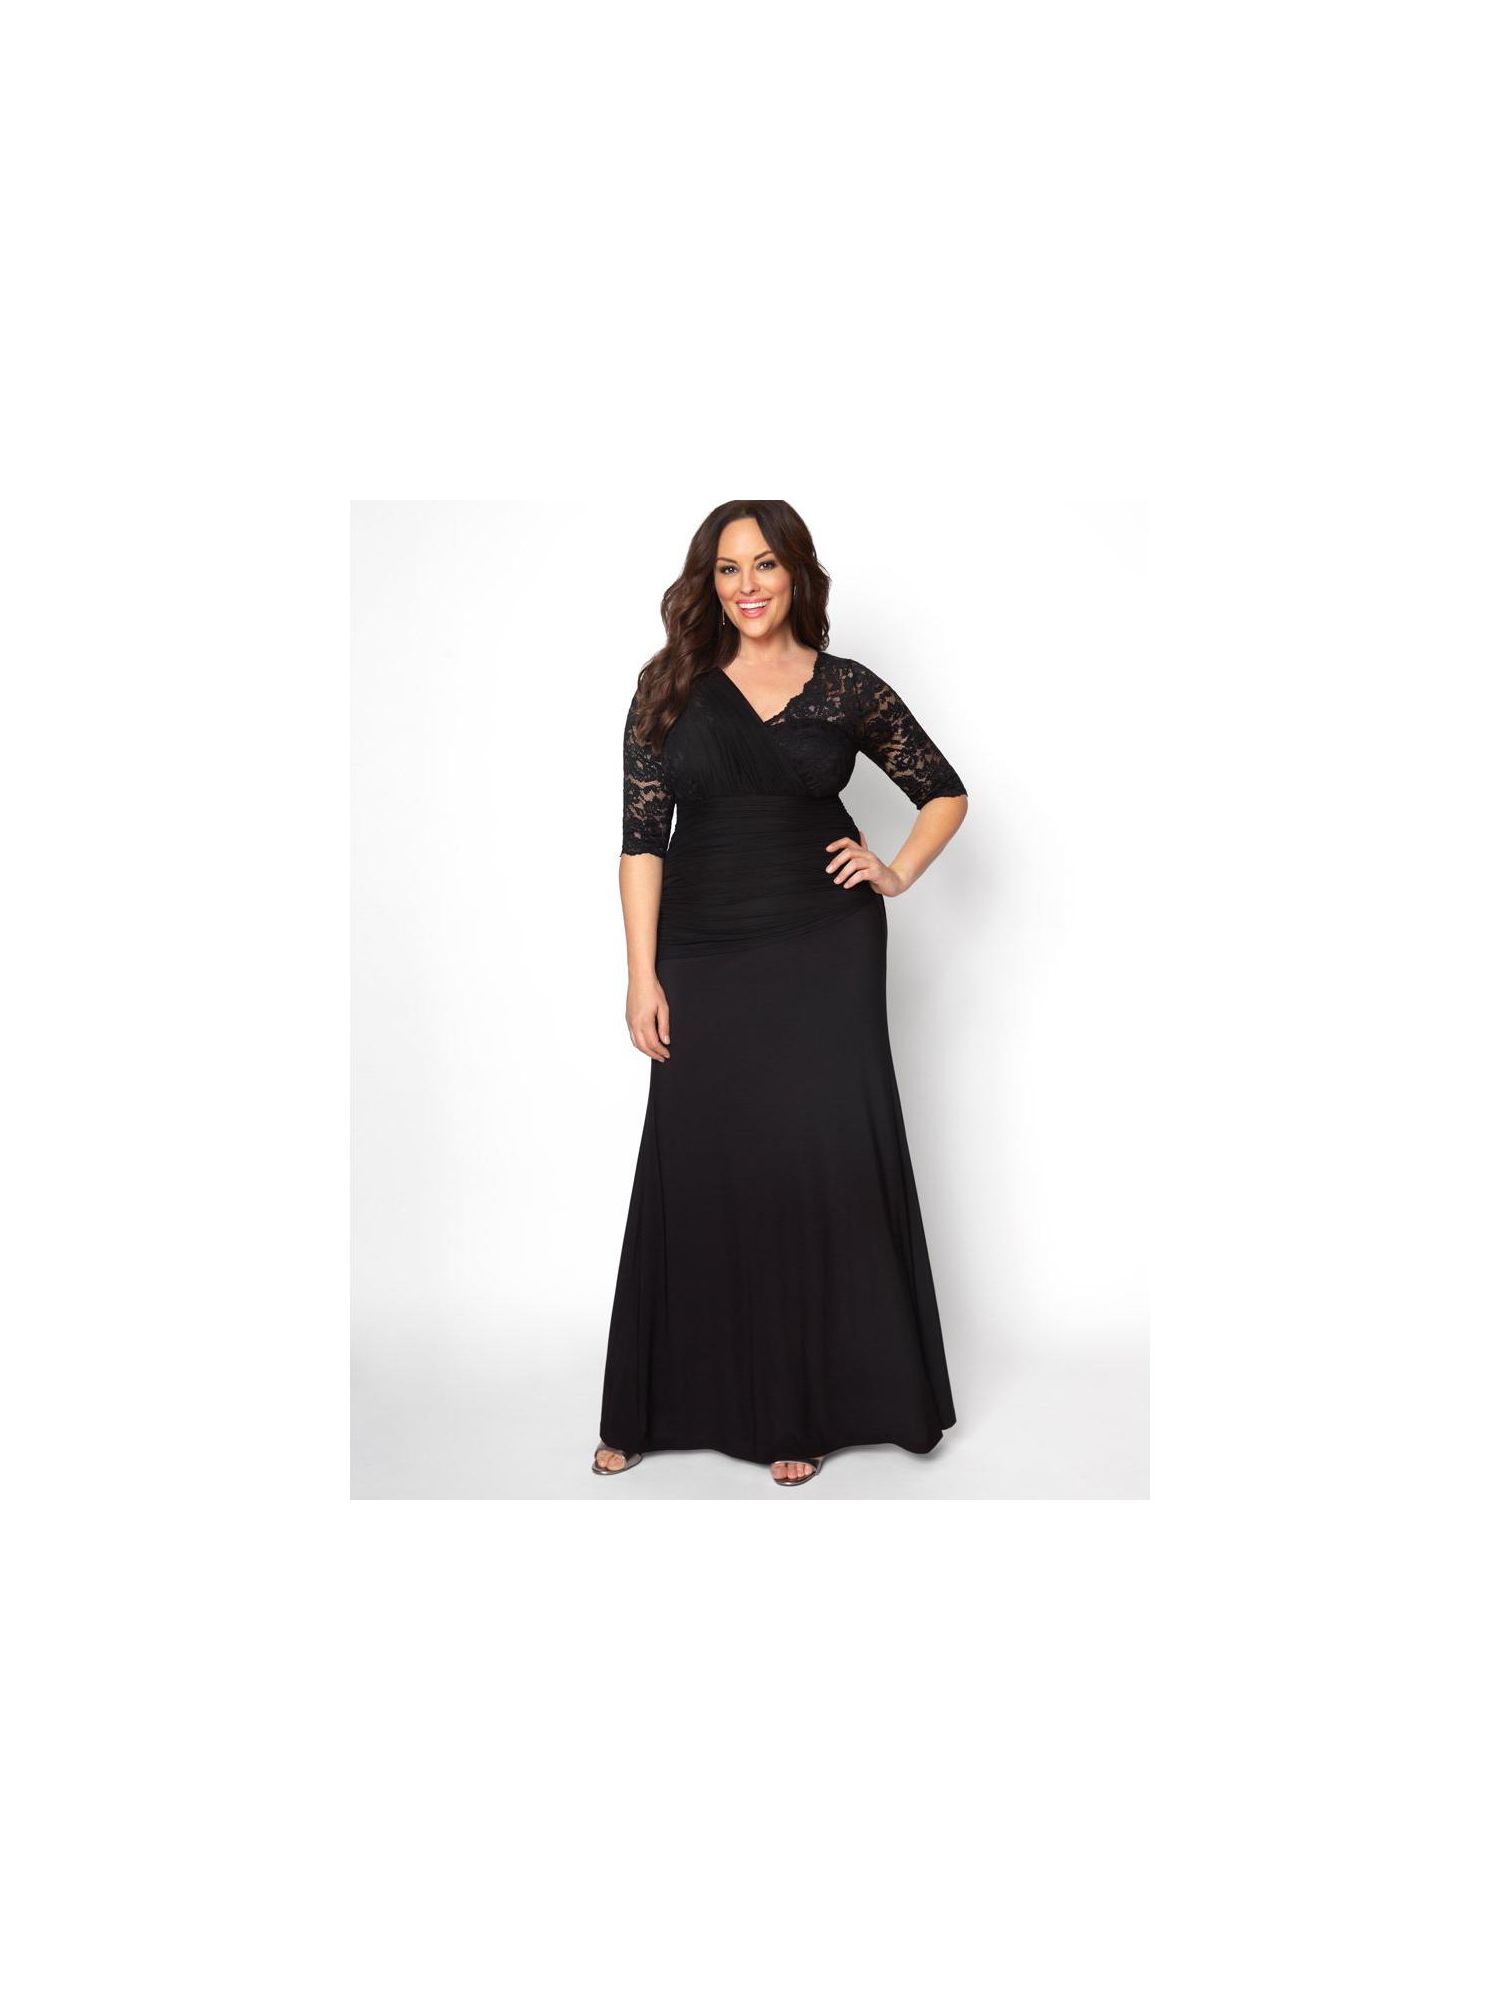 KIYONNA Womens Black Lined  3/4 Sleeve Full-Length Formal Gown Dress Plus 1X